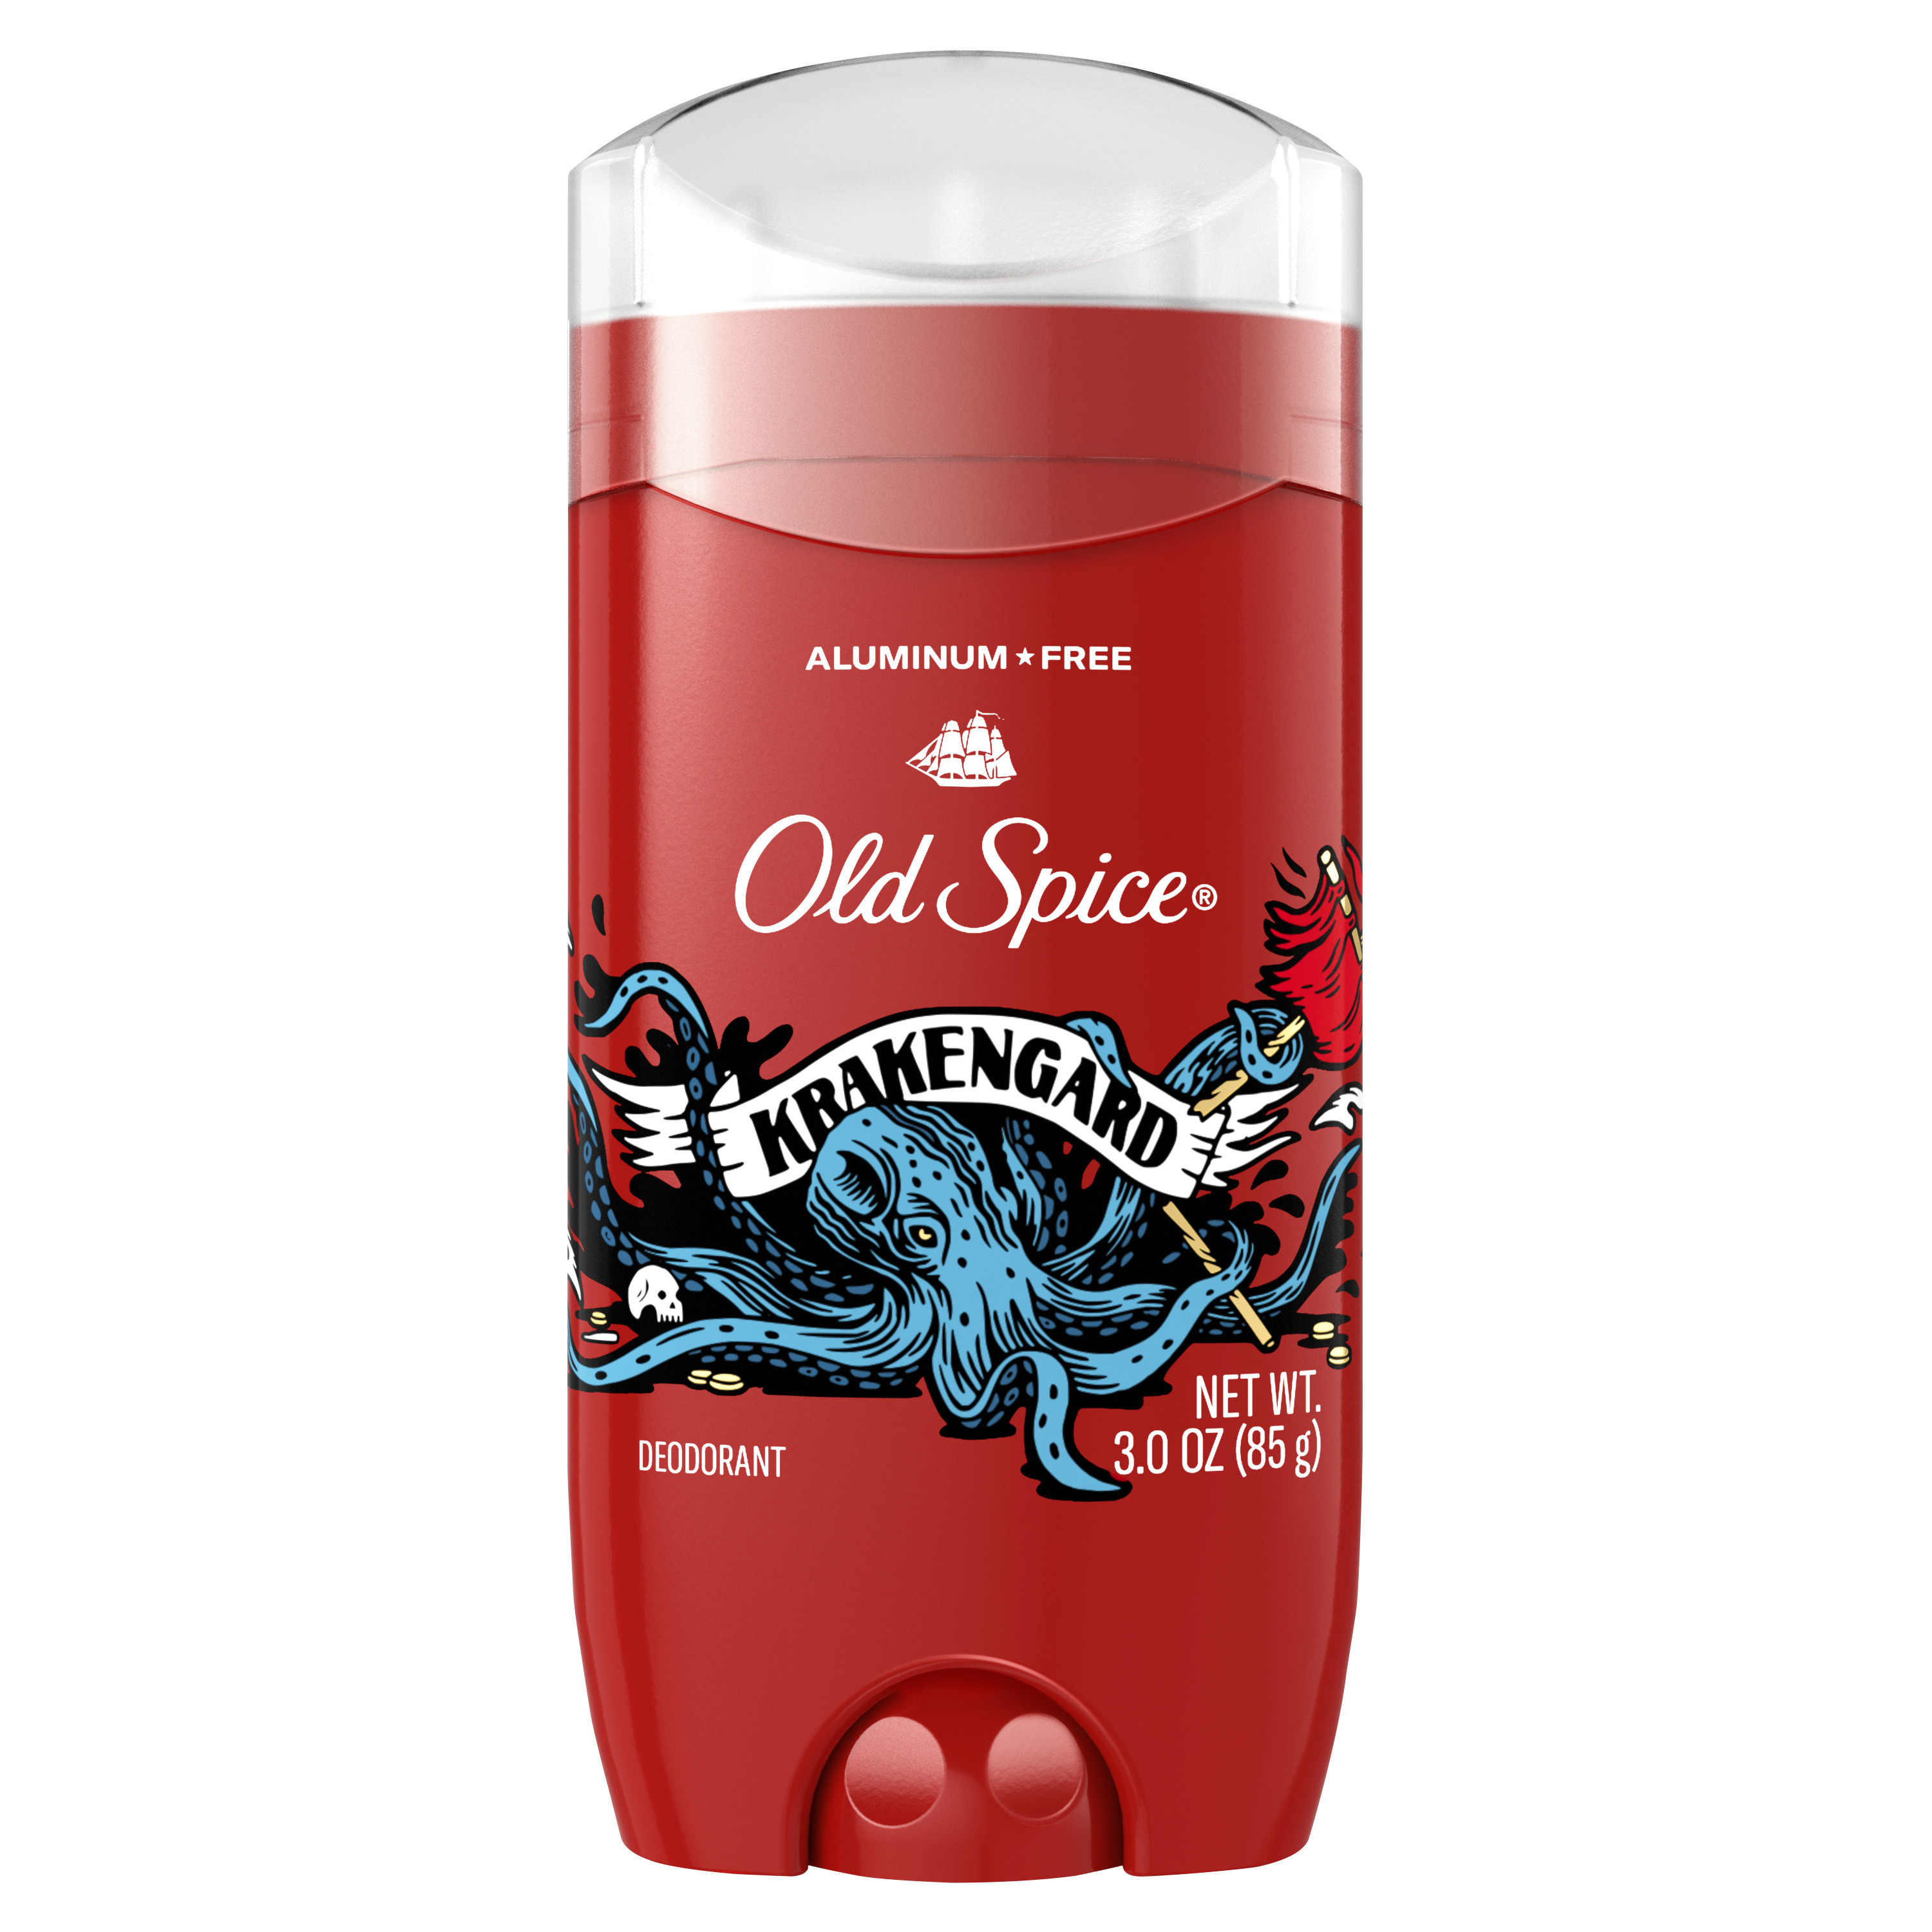 Old Spice Aluminum Free Deodorant for Men, Krakengard, 48 Hr. Protection, 3.0 oz - image 7 of 8